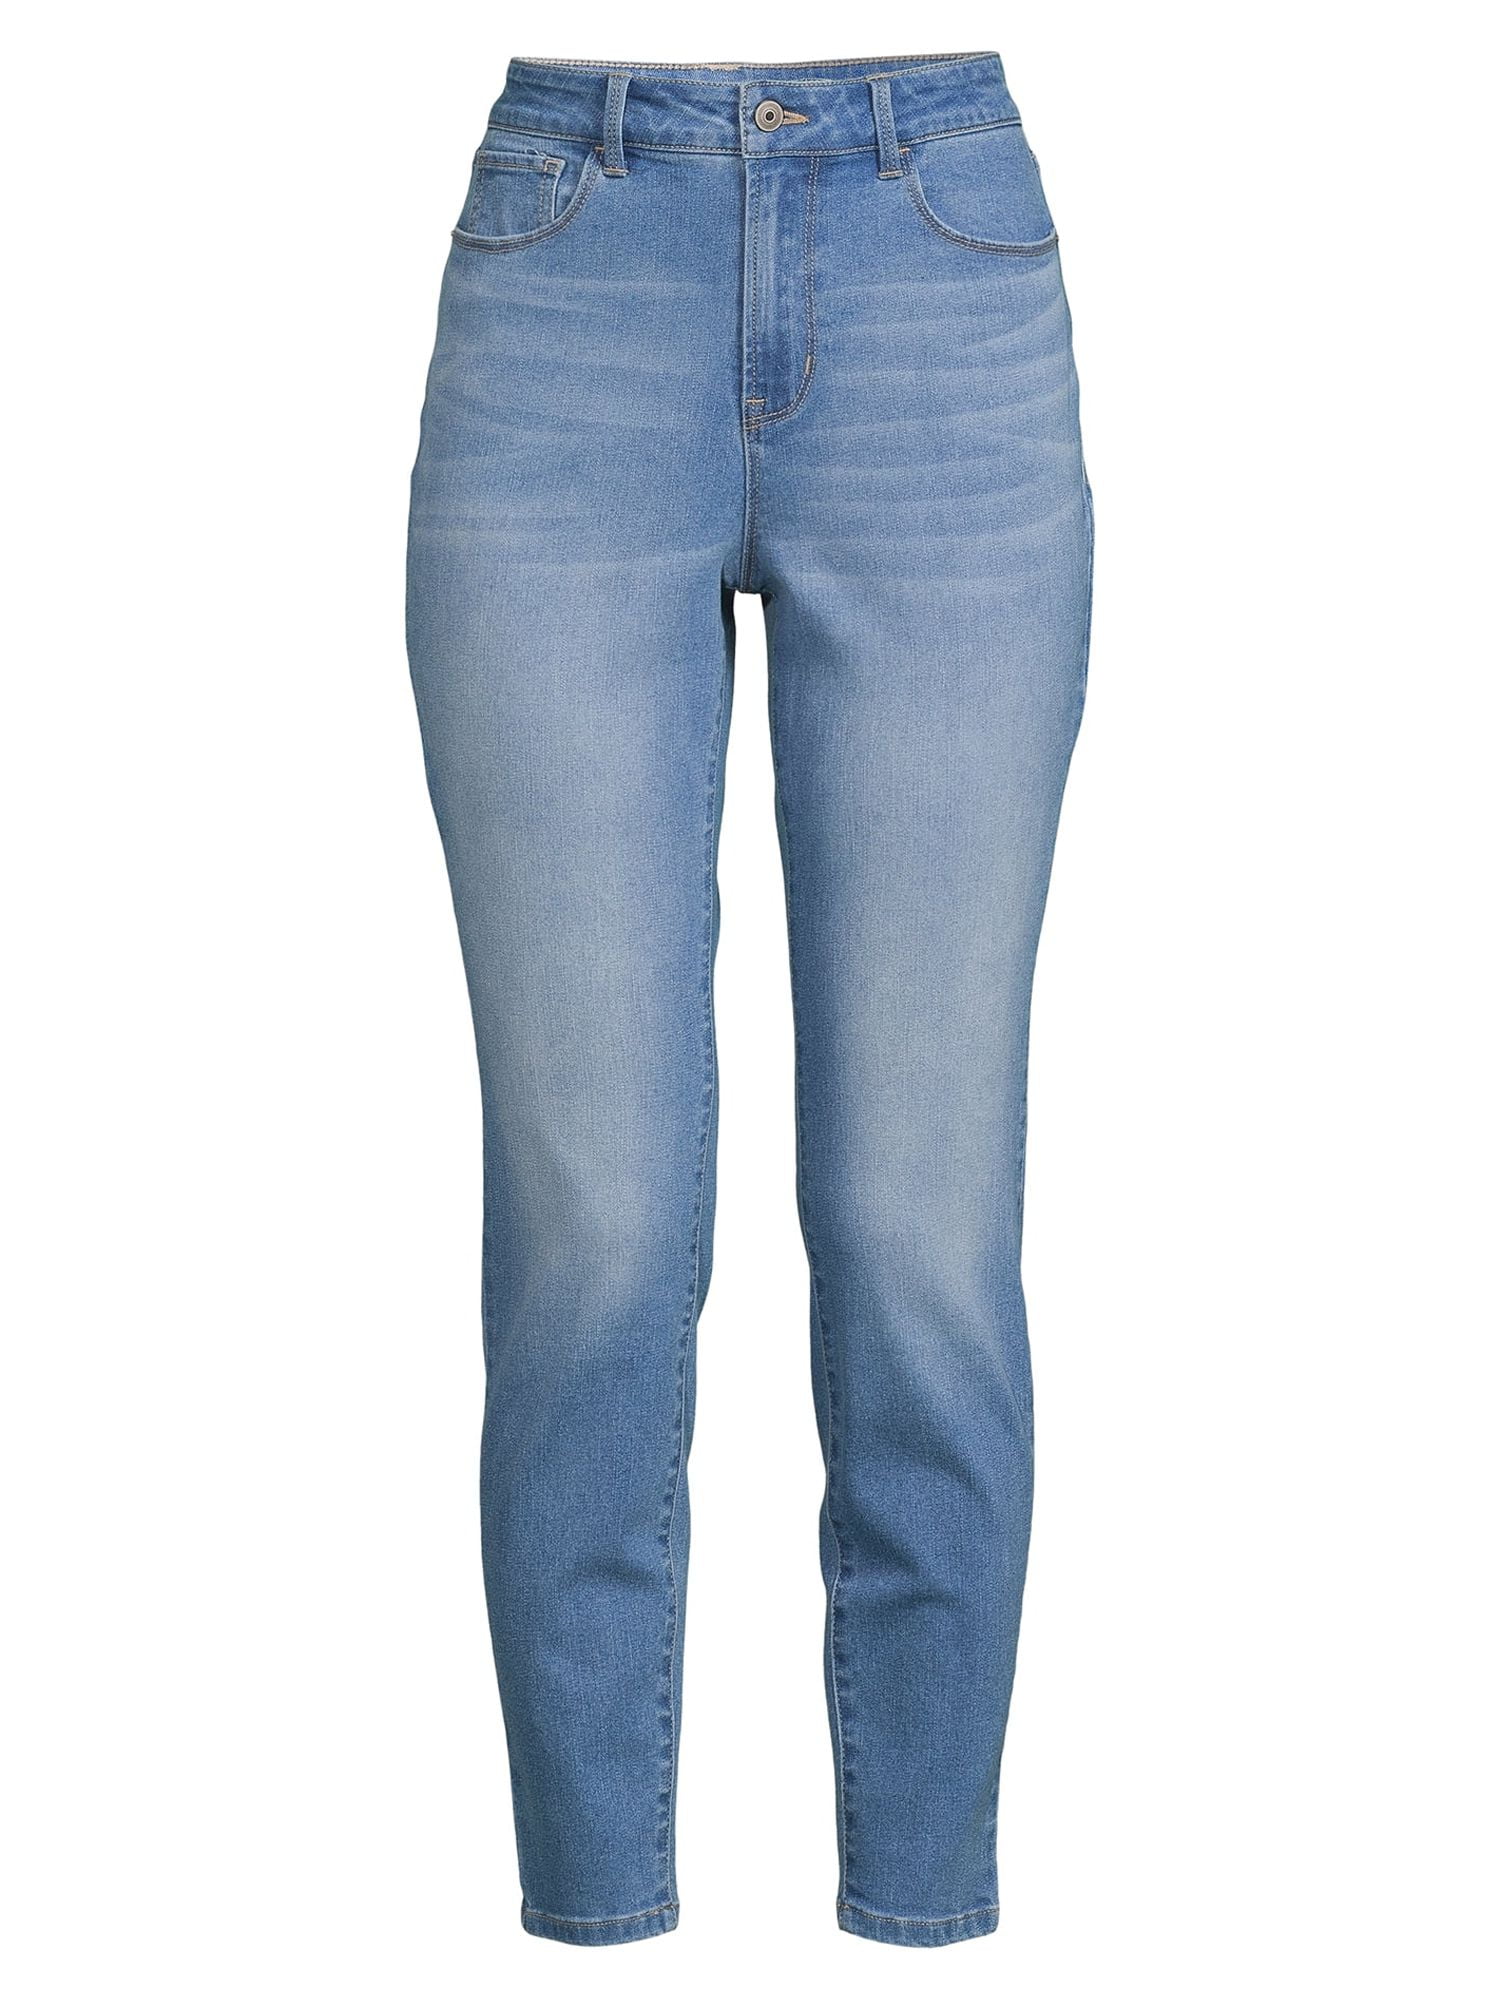 NO BOUNDARIES WOMENS Jeans Blue Denim Regular Mom W27 L24 £12.99 - PicClick  UK